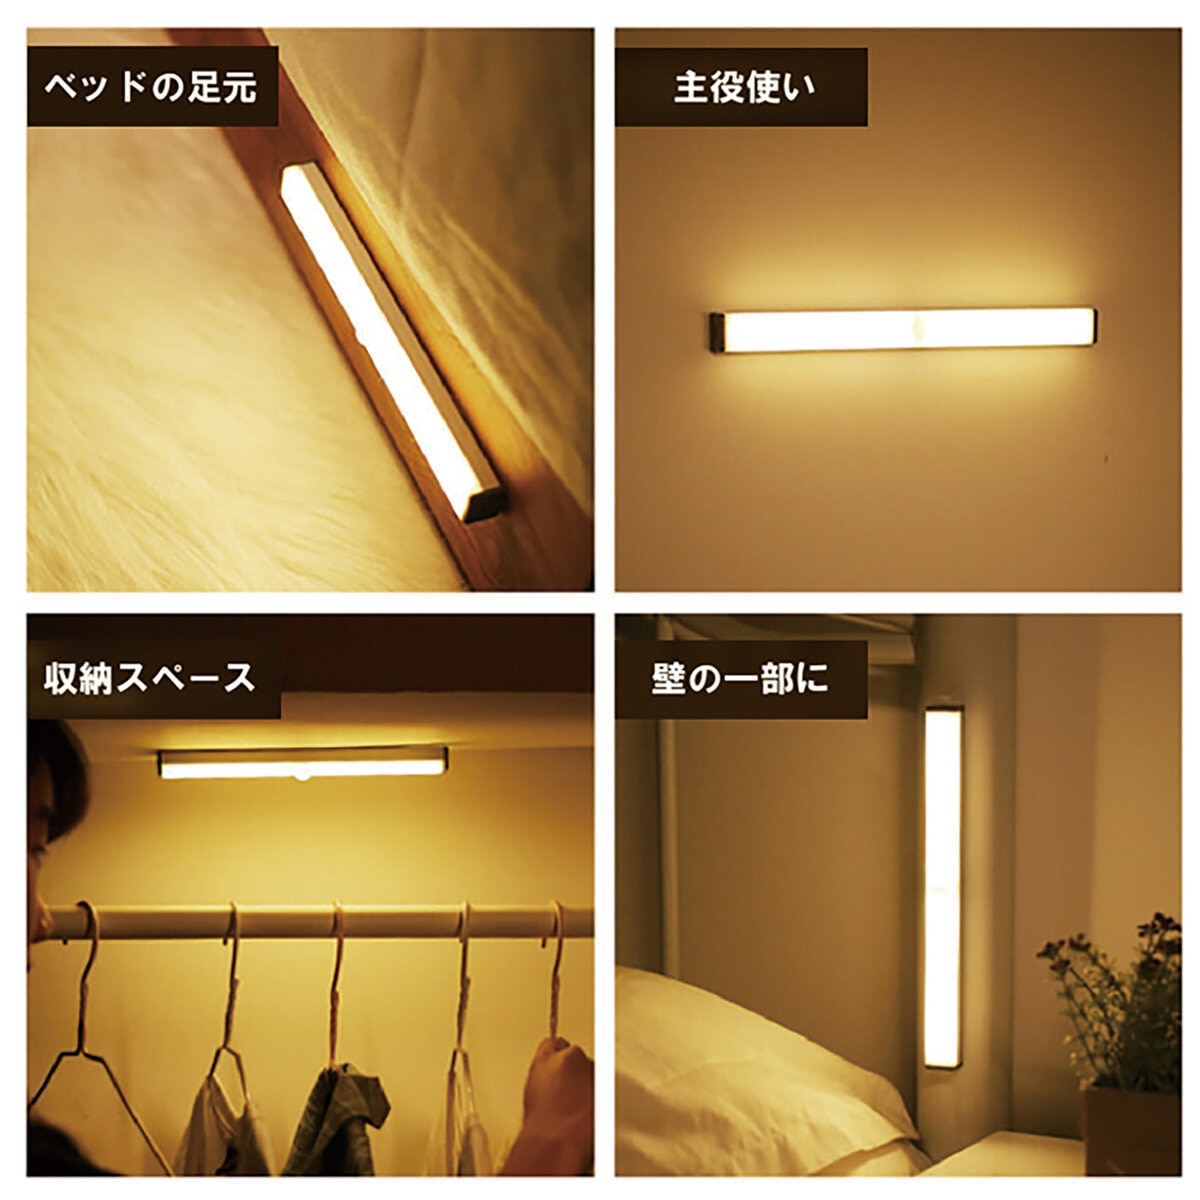 7Life 薄型 人感センサーLEDライト Mサイズ 幅280mm | Costco Japan